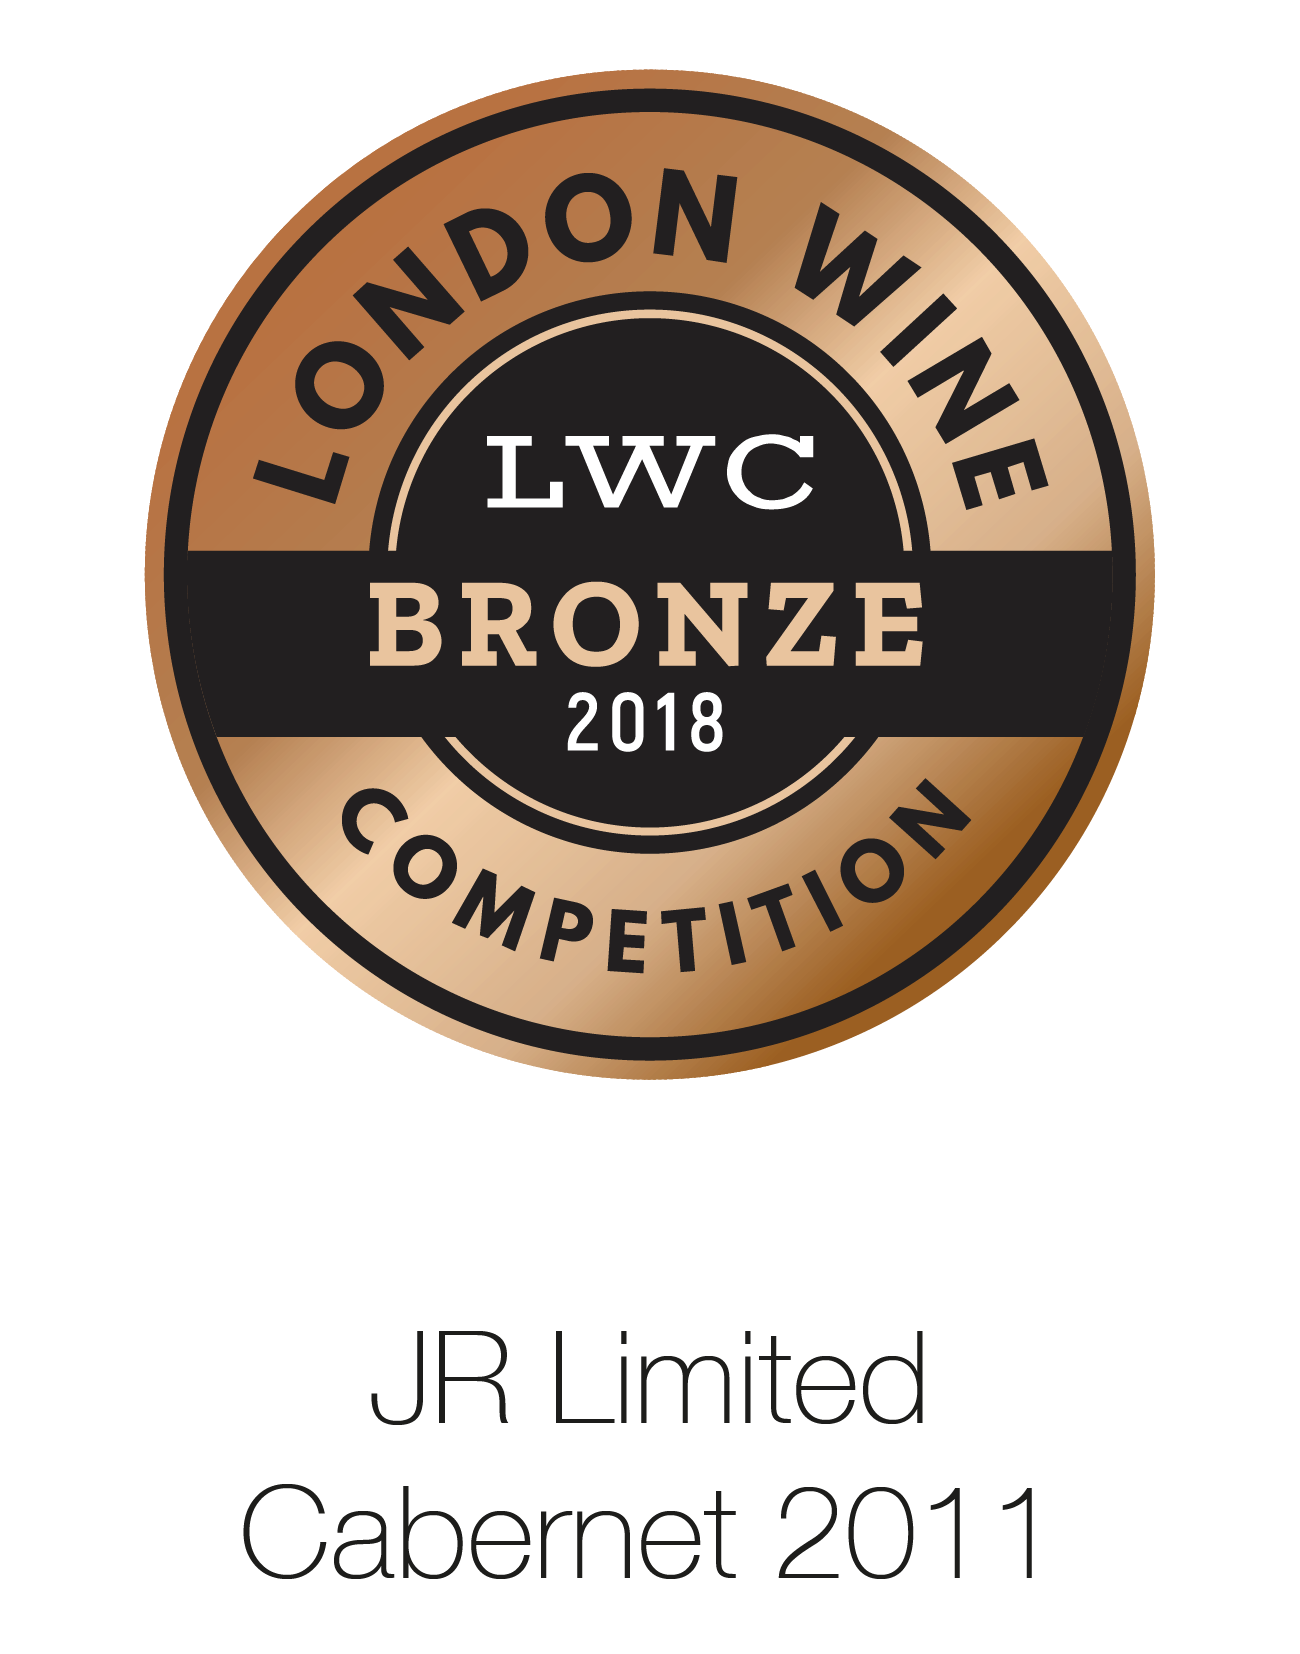 JR Limited Edition - Cabernet Sauvignon 2011 - London Wine Competition 2018